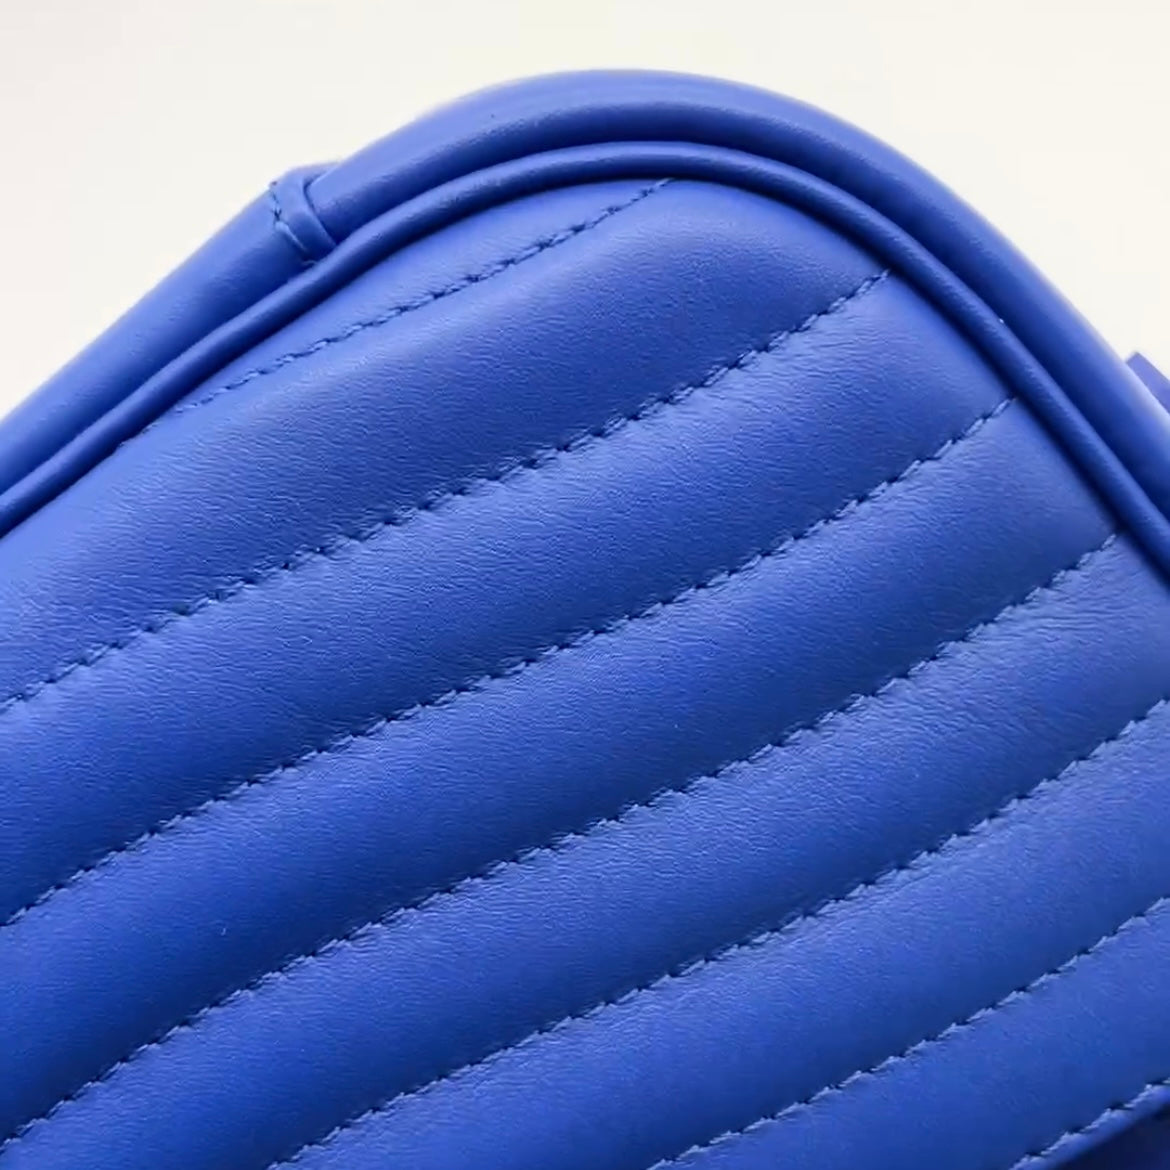 Preloved Louis Vuitton LV New Wave Camera Bag